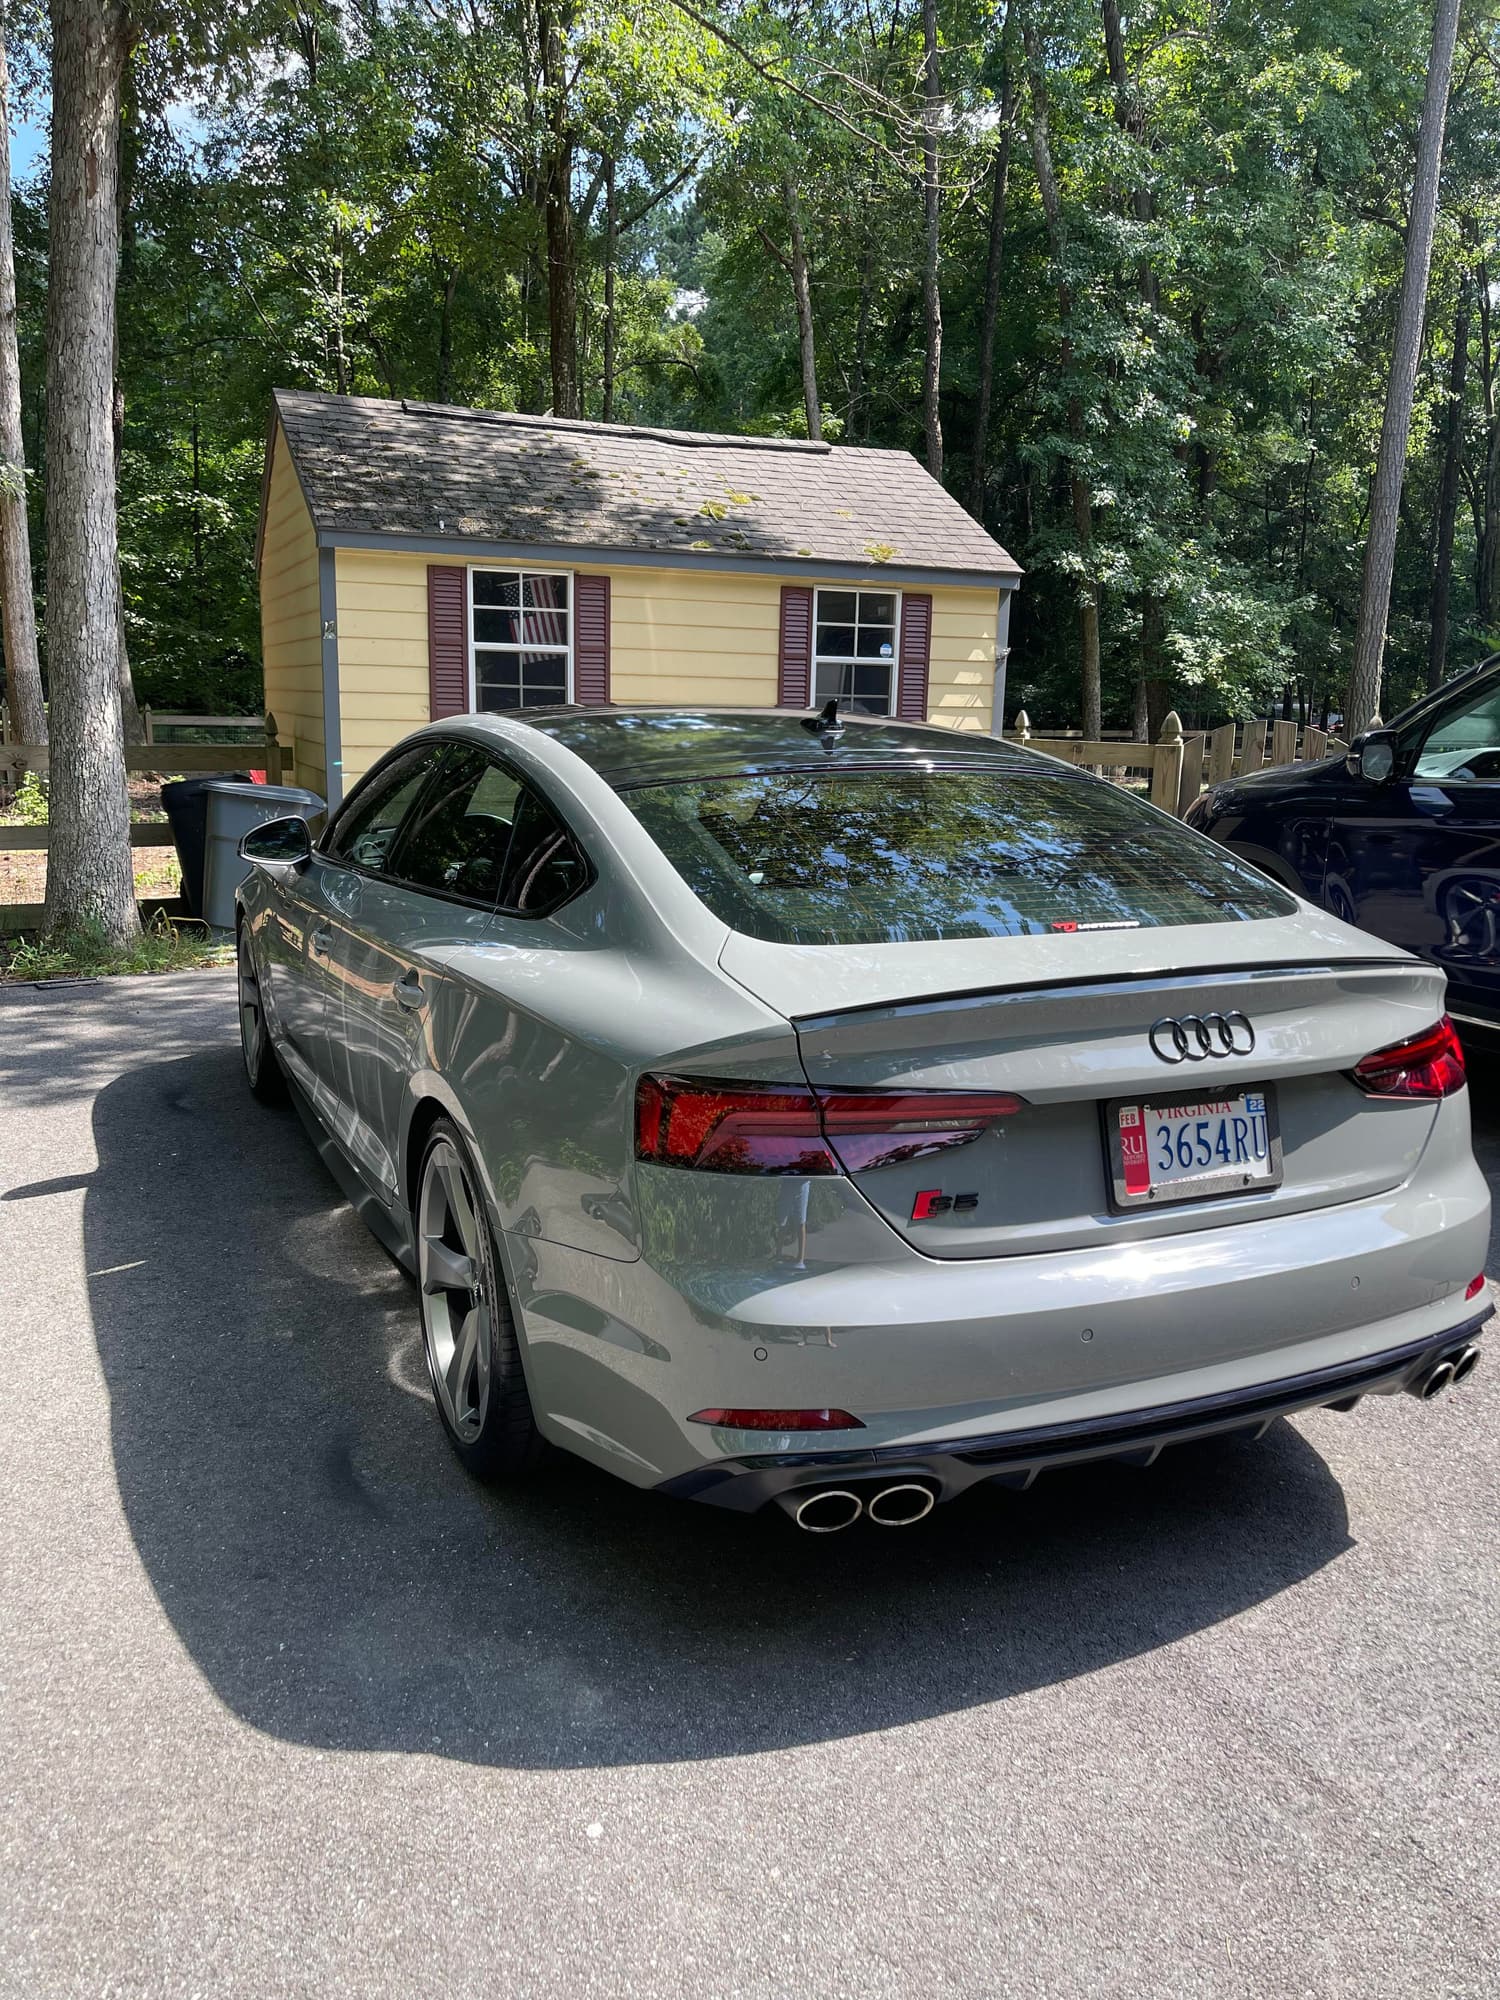 2019 Audi S5 Sportback - 2019 S5 Sportback Prestige - Quantum Grey - For Sale - Used - VIN WAUC4CF53KA047295 - 22,000 Miles - 6 cyl - AWD - Automatic - Hatchback - Gray - Richmond, VA 23113, United States